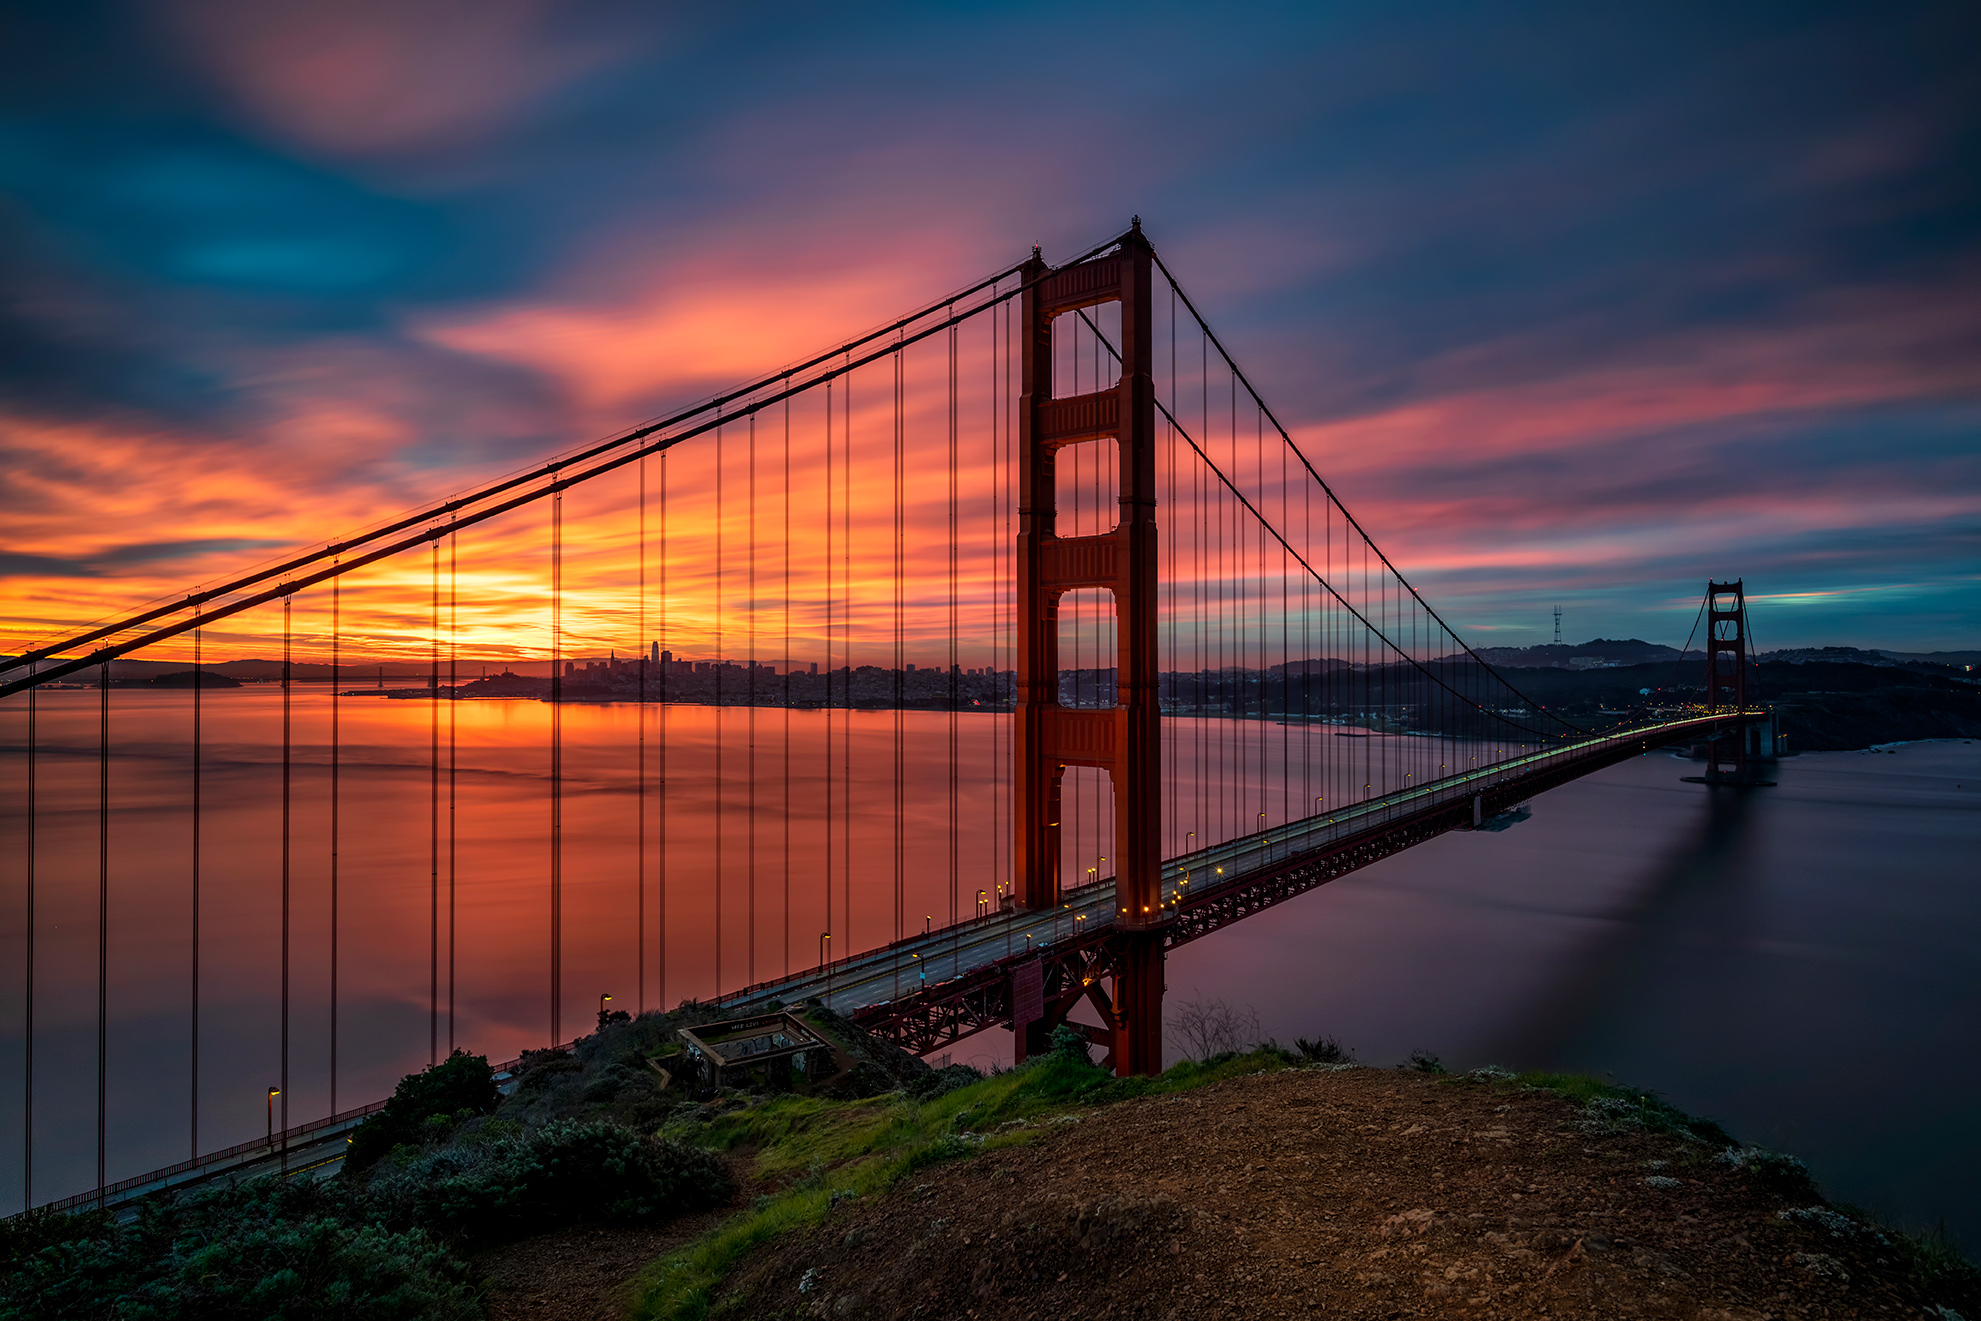 Epic sunrise over the Golden Gate Bridge, San Francisco